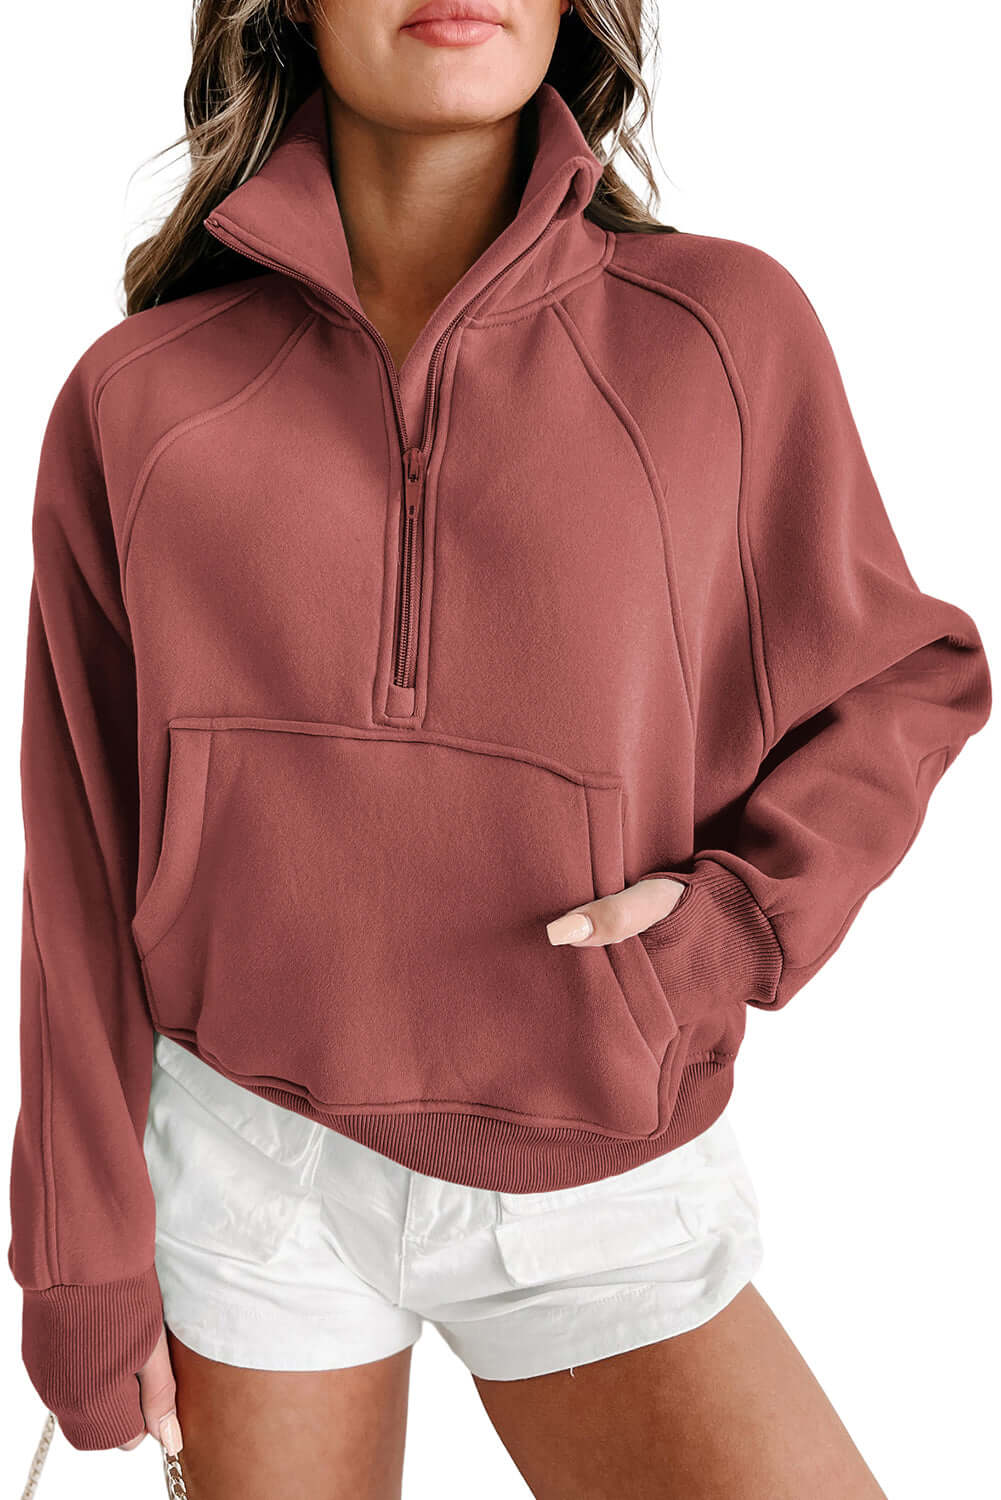 Brown Zip Up Stand Collar Ribbed Thumbhole Sleeve Sweatshirt - Dixie Hike & Style